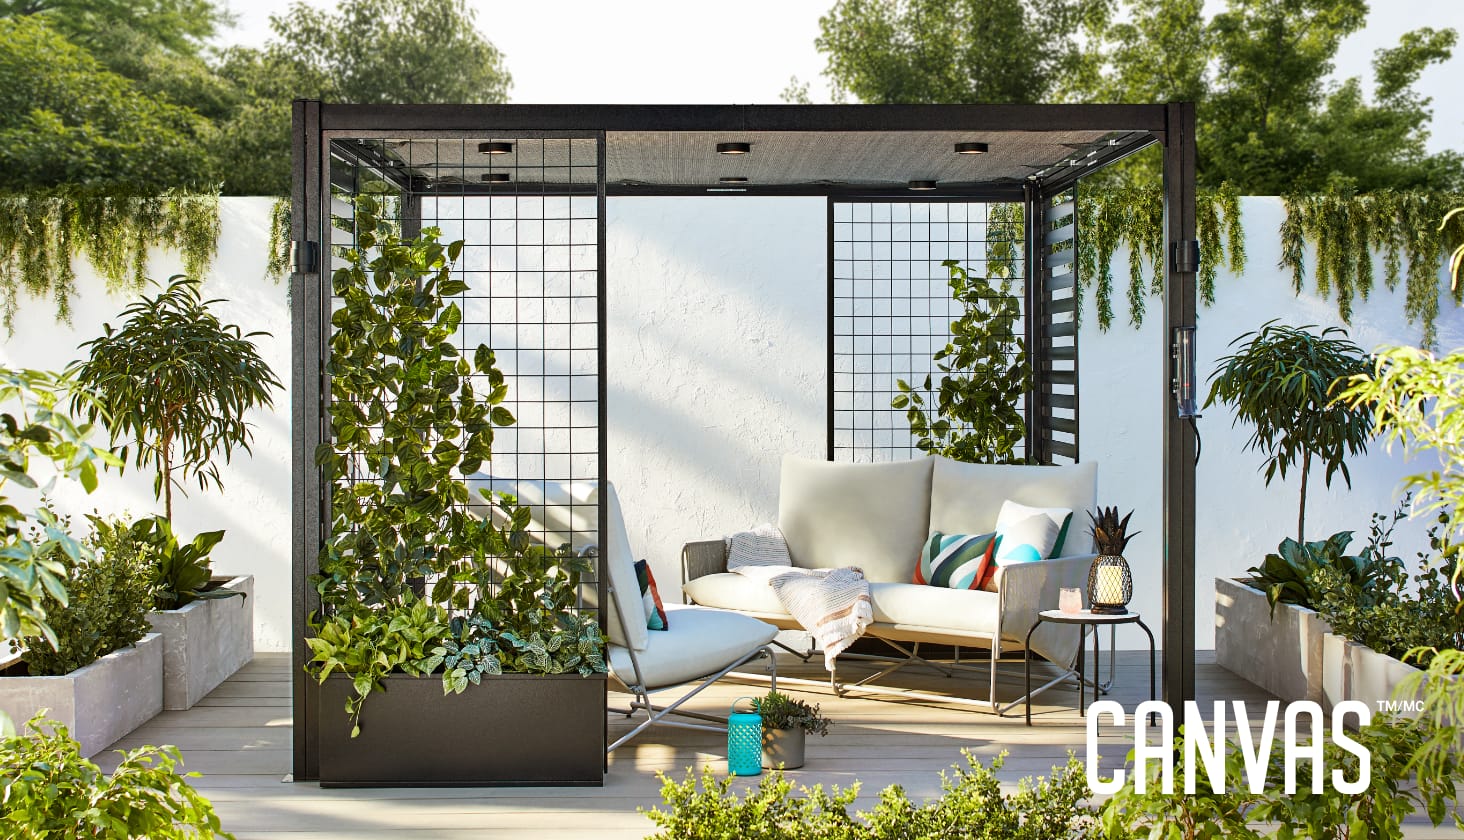 CANVAS Horizon Pergola with plants and  CANVAS Banks Sofa Seats in a backyard.